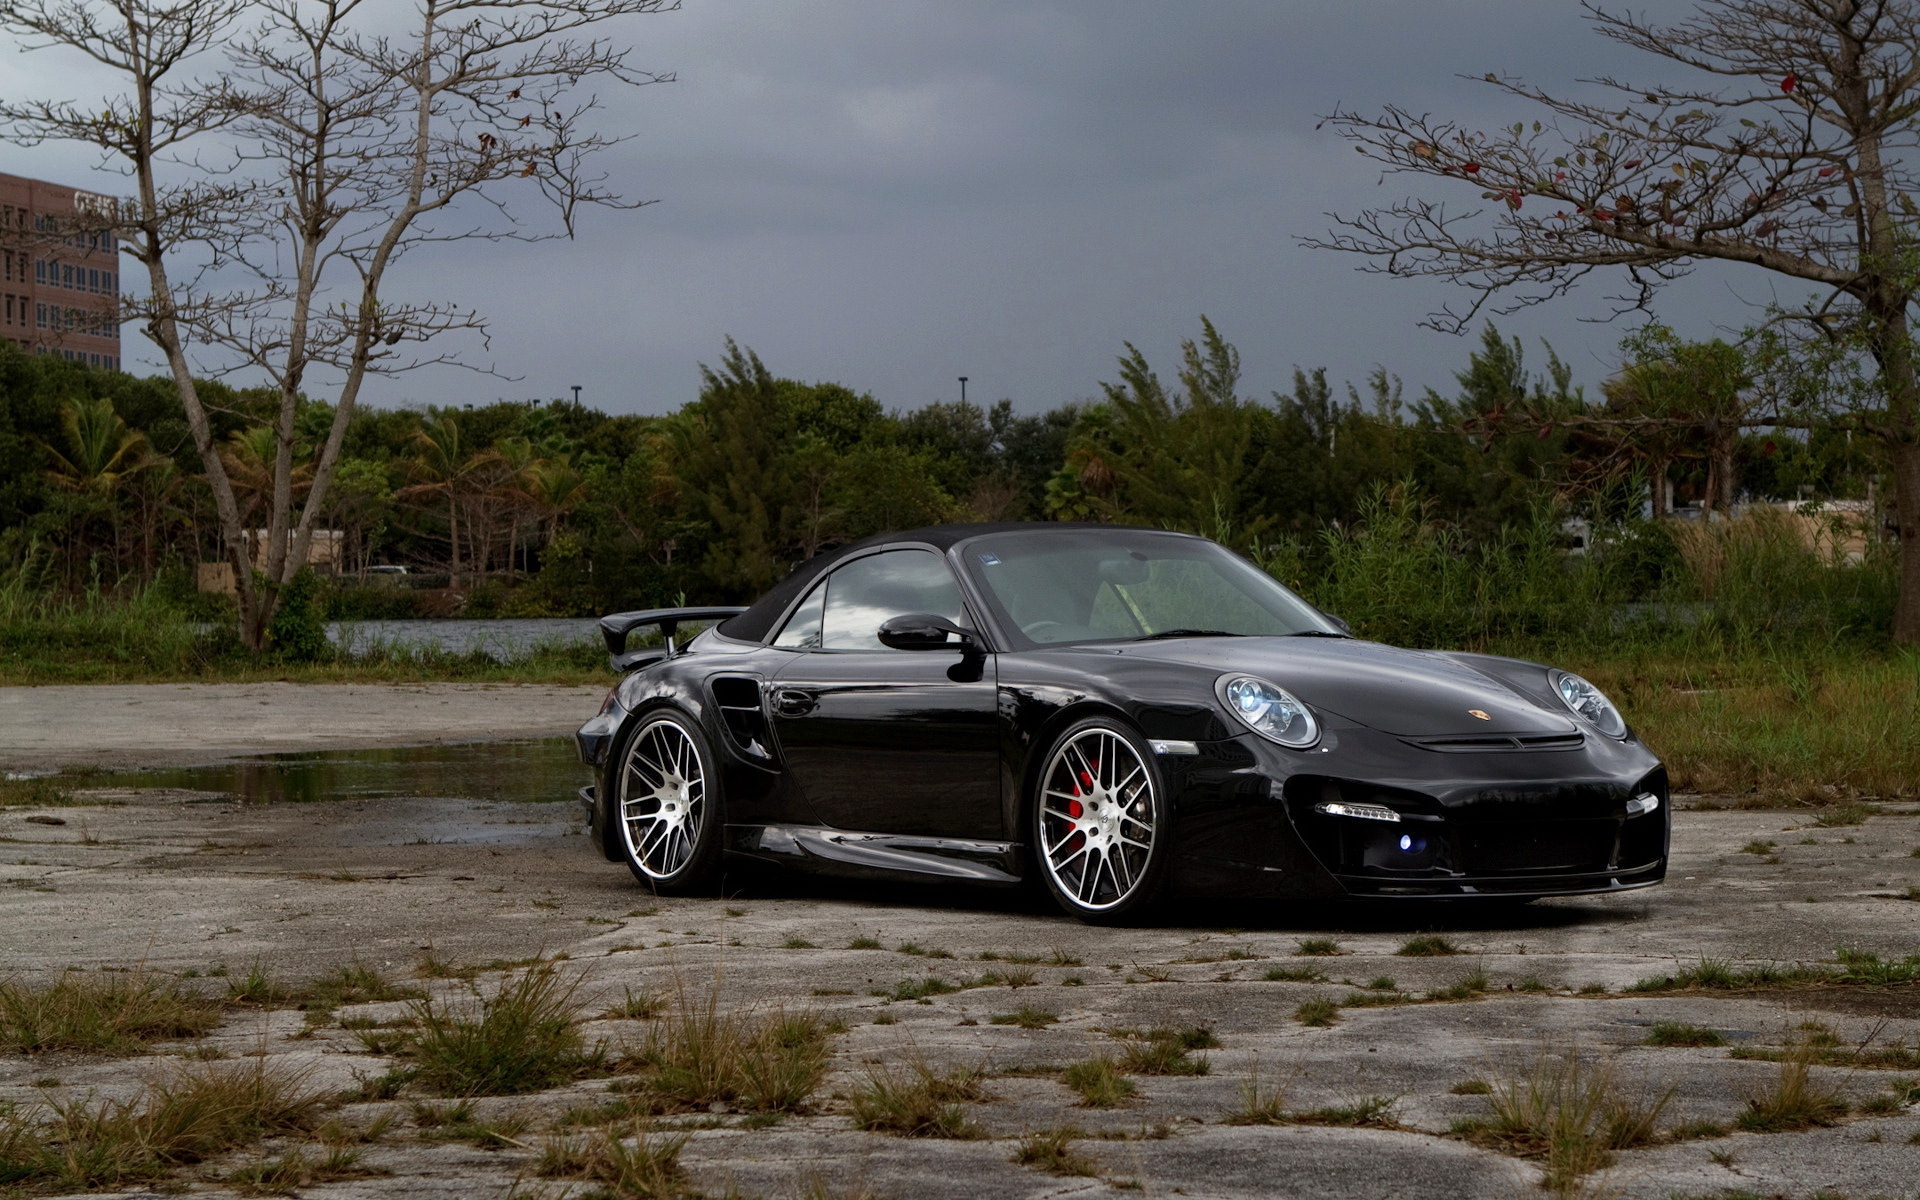 Porsche HD Wallpaper | Background Image | 1920x1200 | ID ...